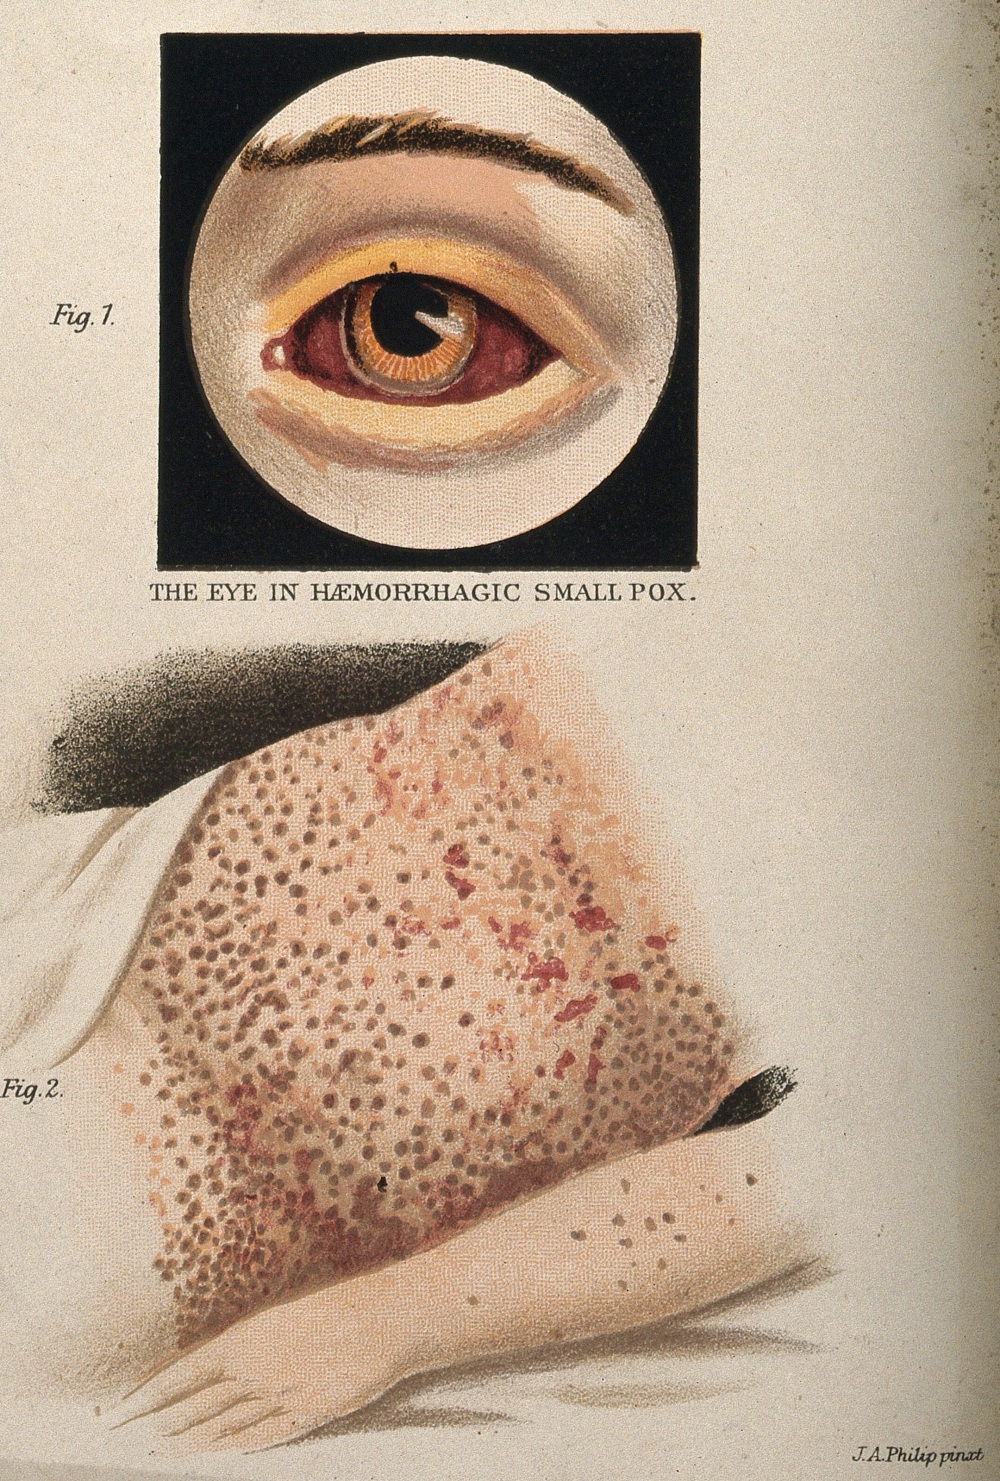 1900 illustration of smallpox symptoms